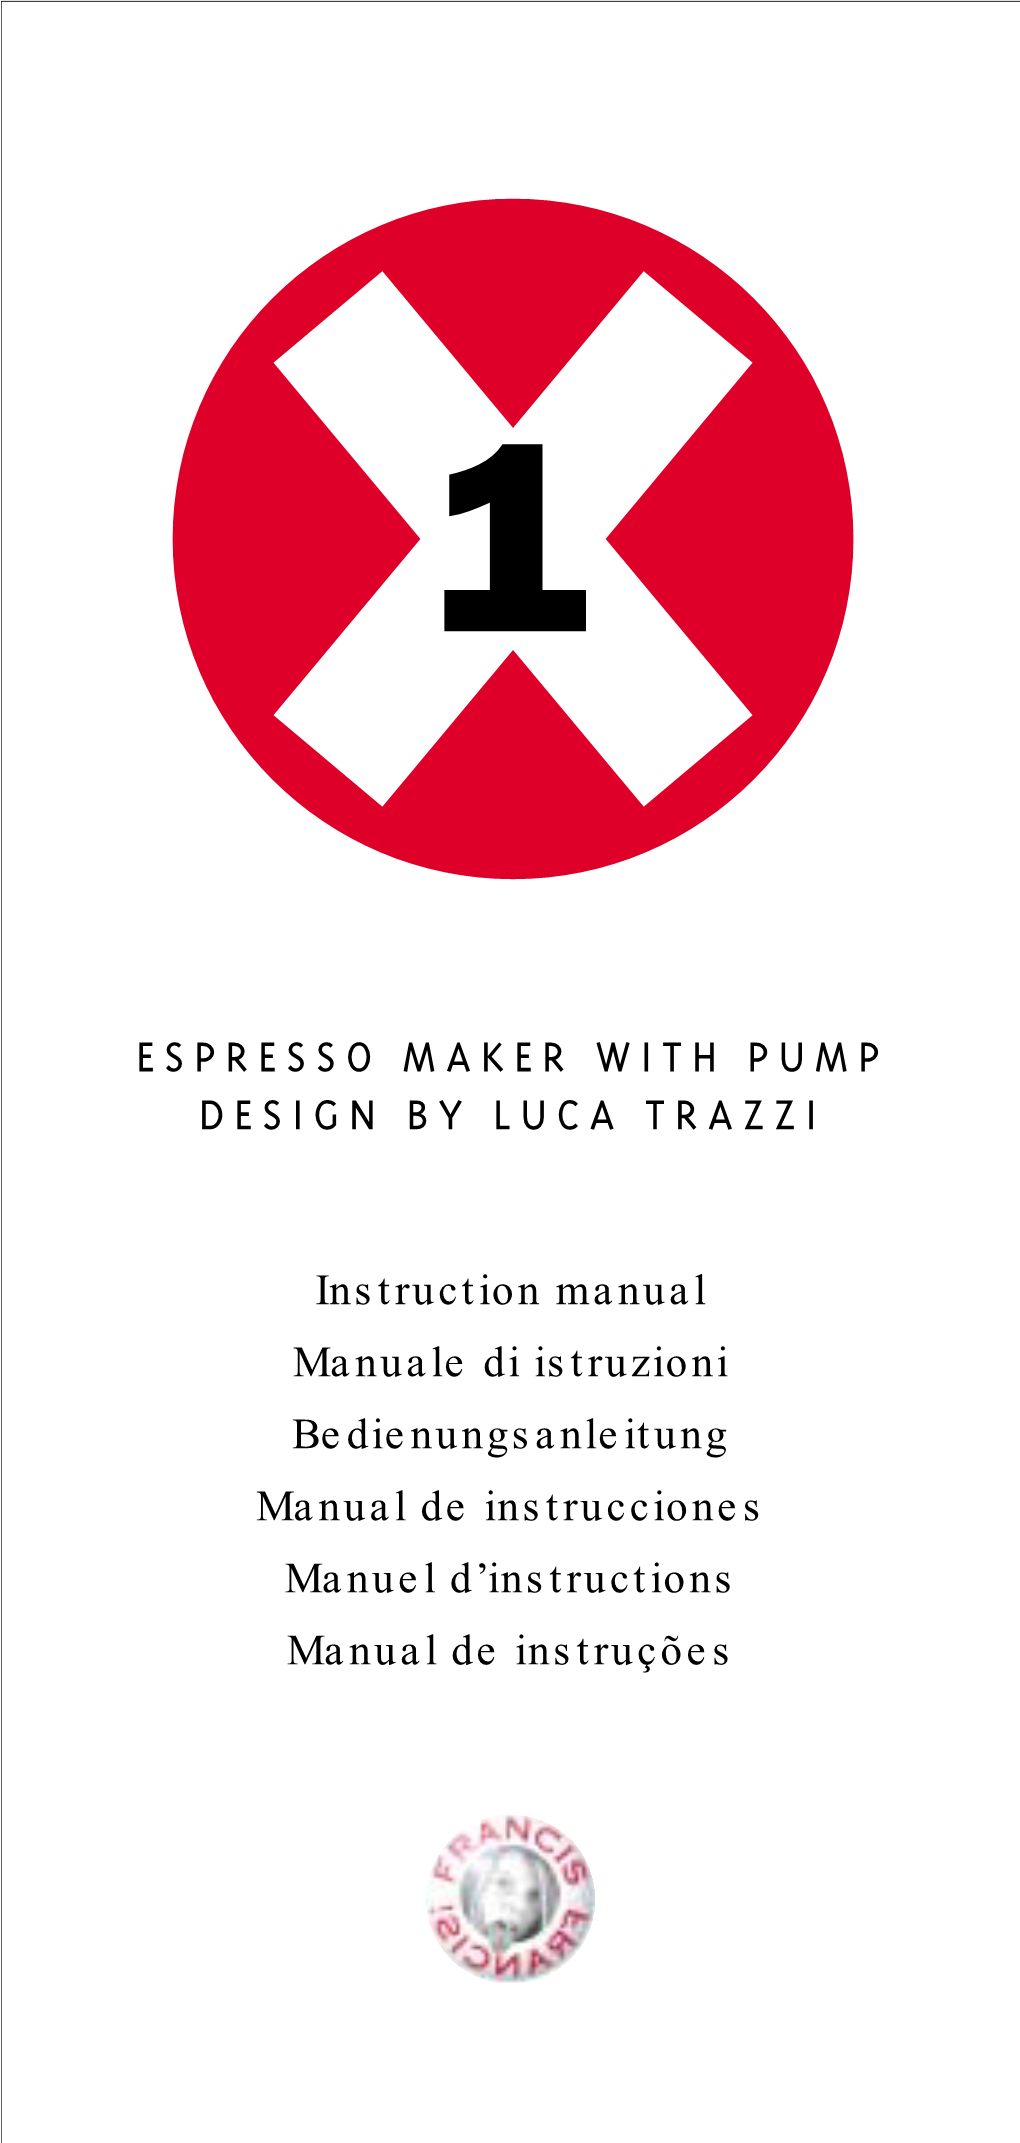 Espresso Maker with Pump Design by Luca Trazzi